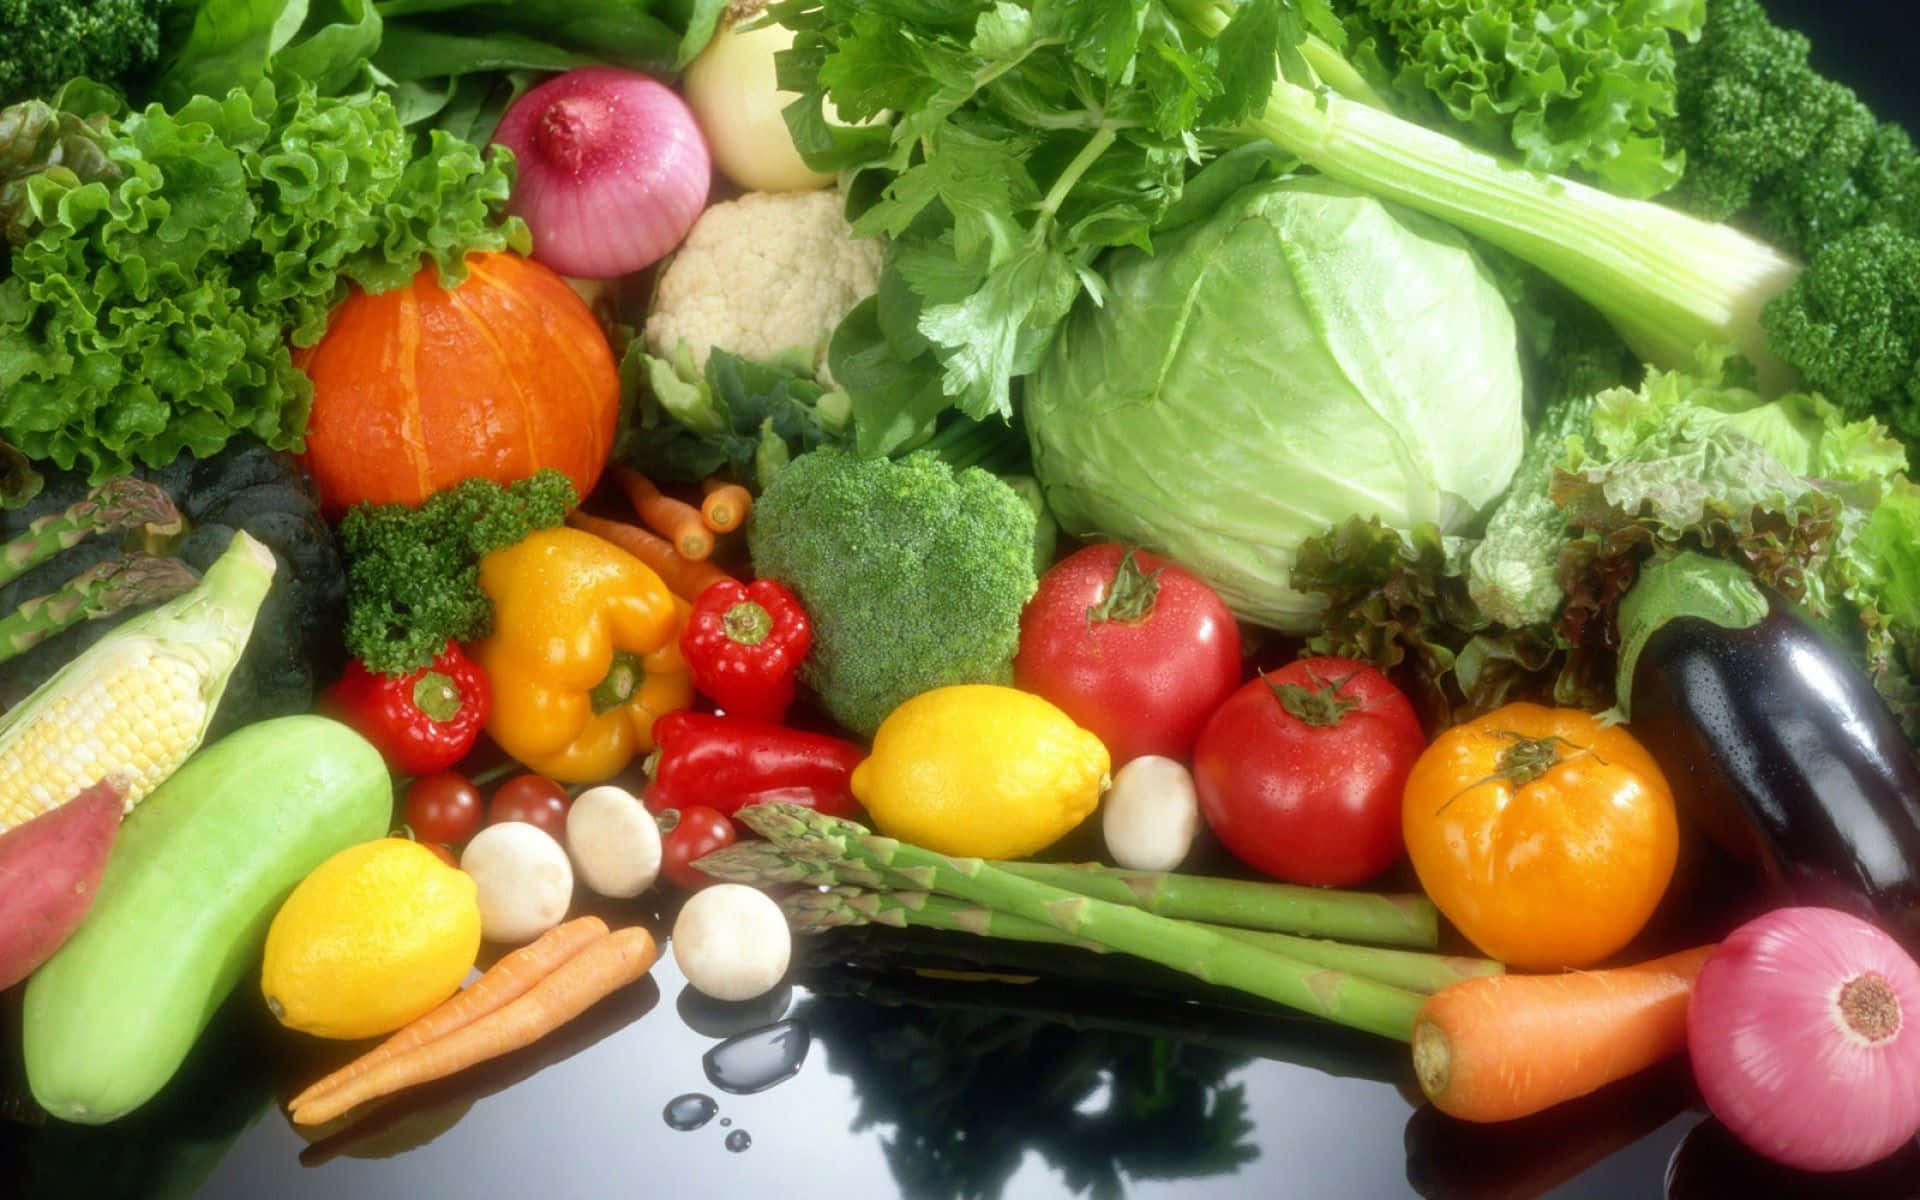 Caption: Vibrant Assortment of Fresh Vegetables